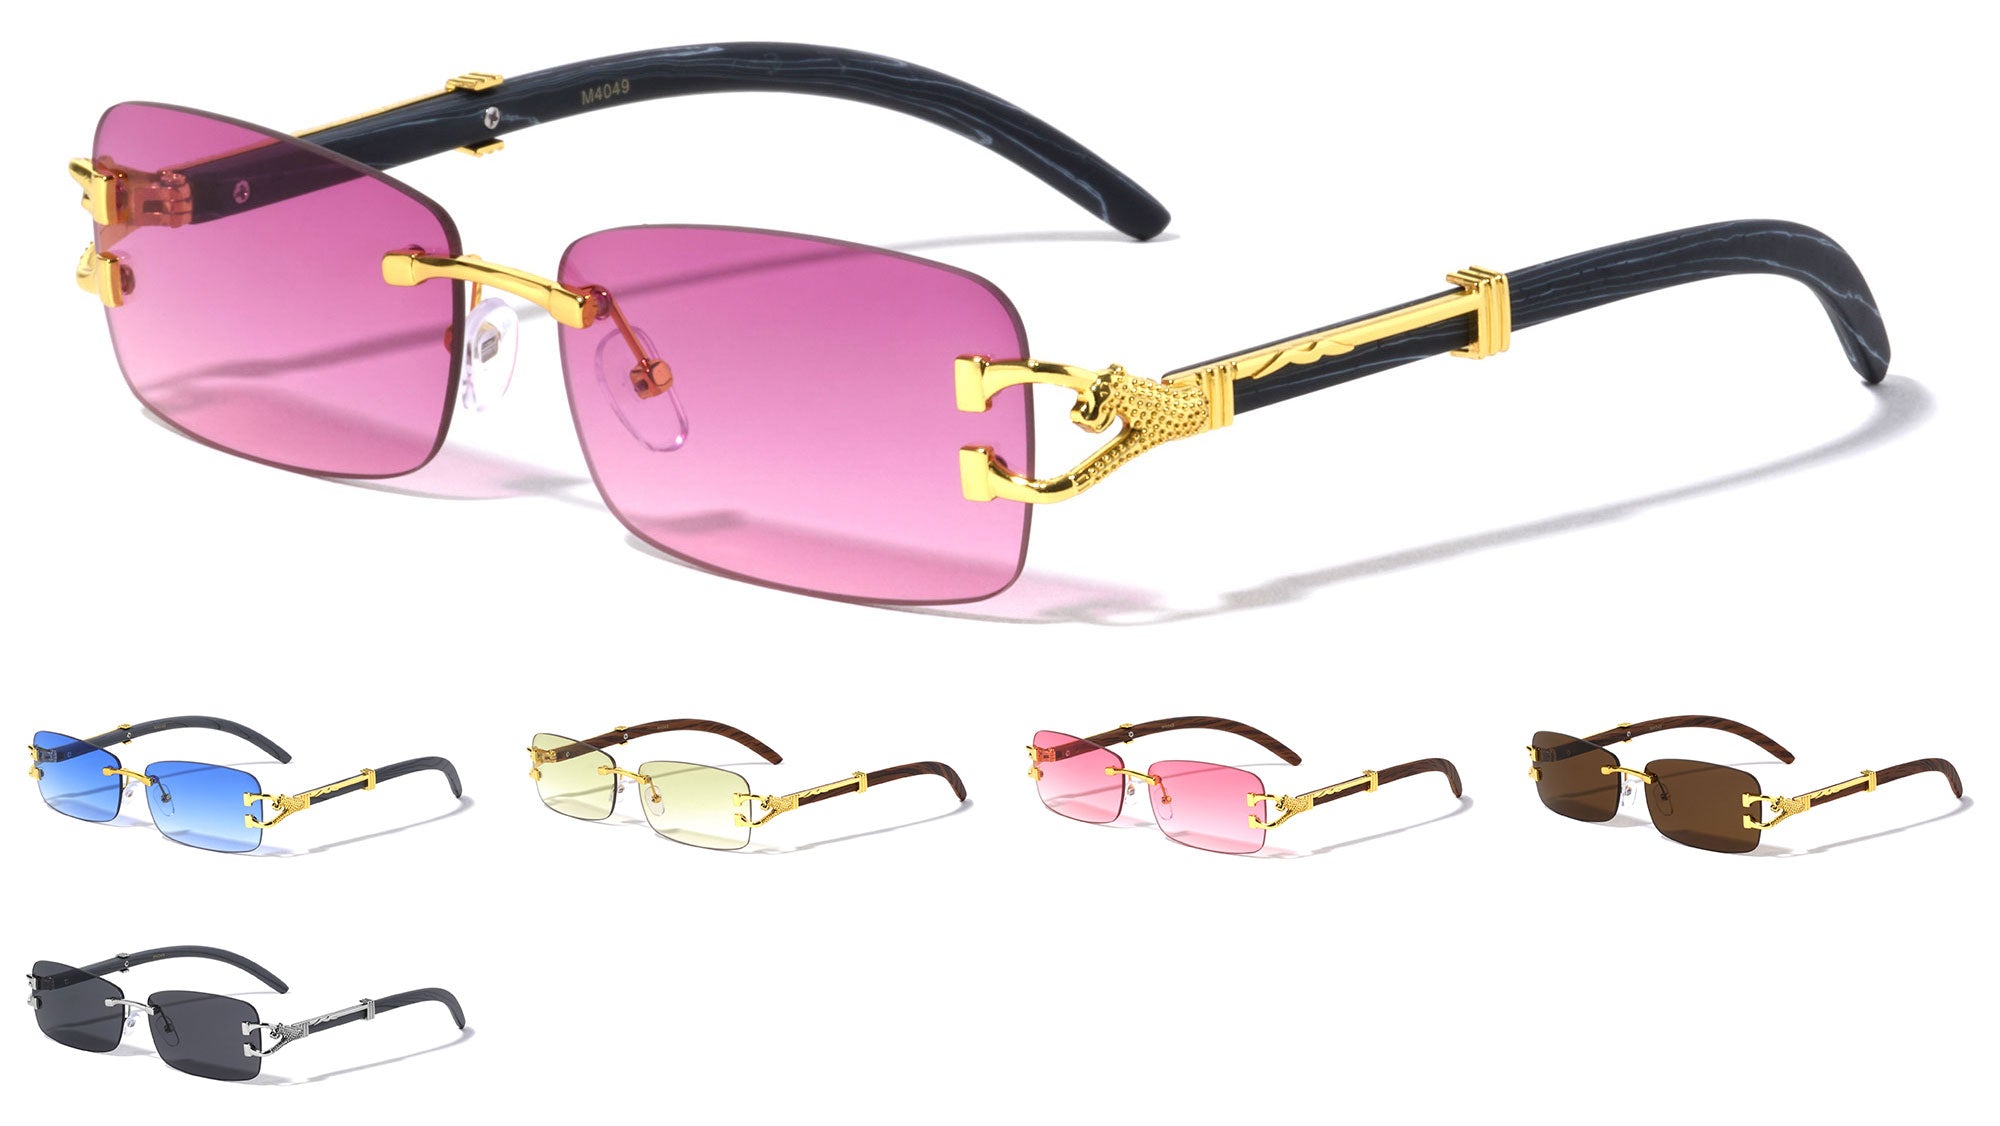 Wholesale Assorted Color Polycarbonate UV400 Semi-Rimless Sport Sunglasses Men | 1 Dozen with Tags | MIS04